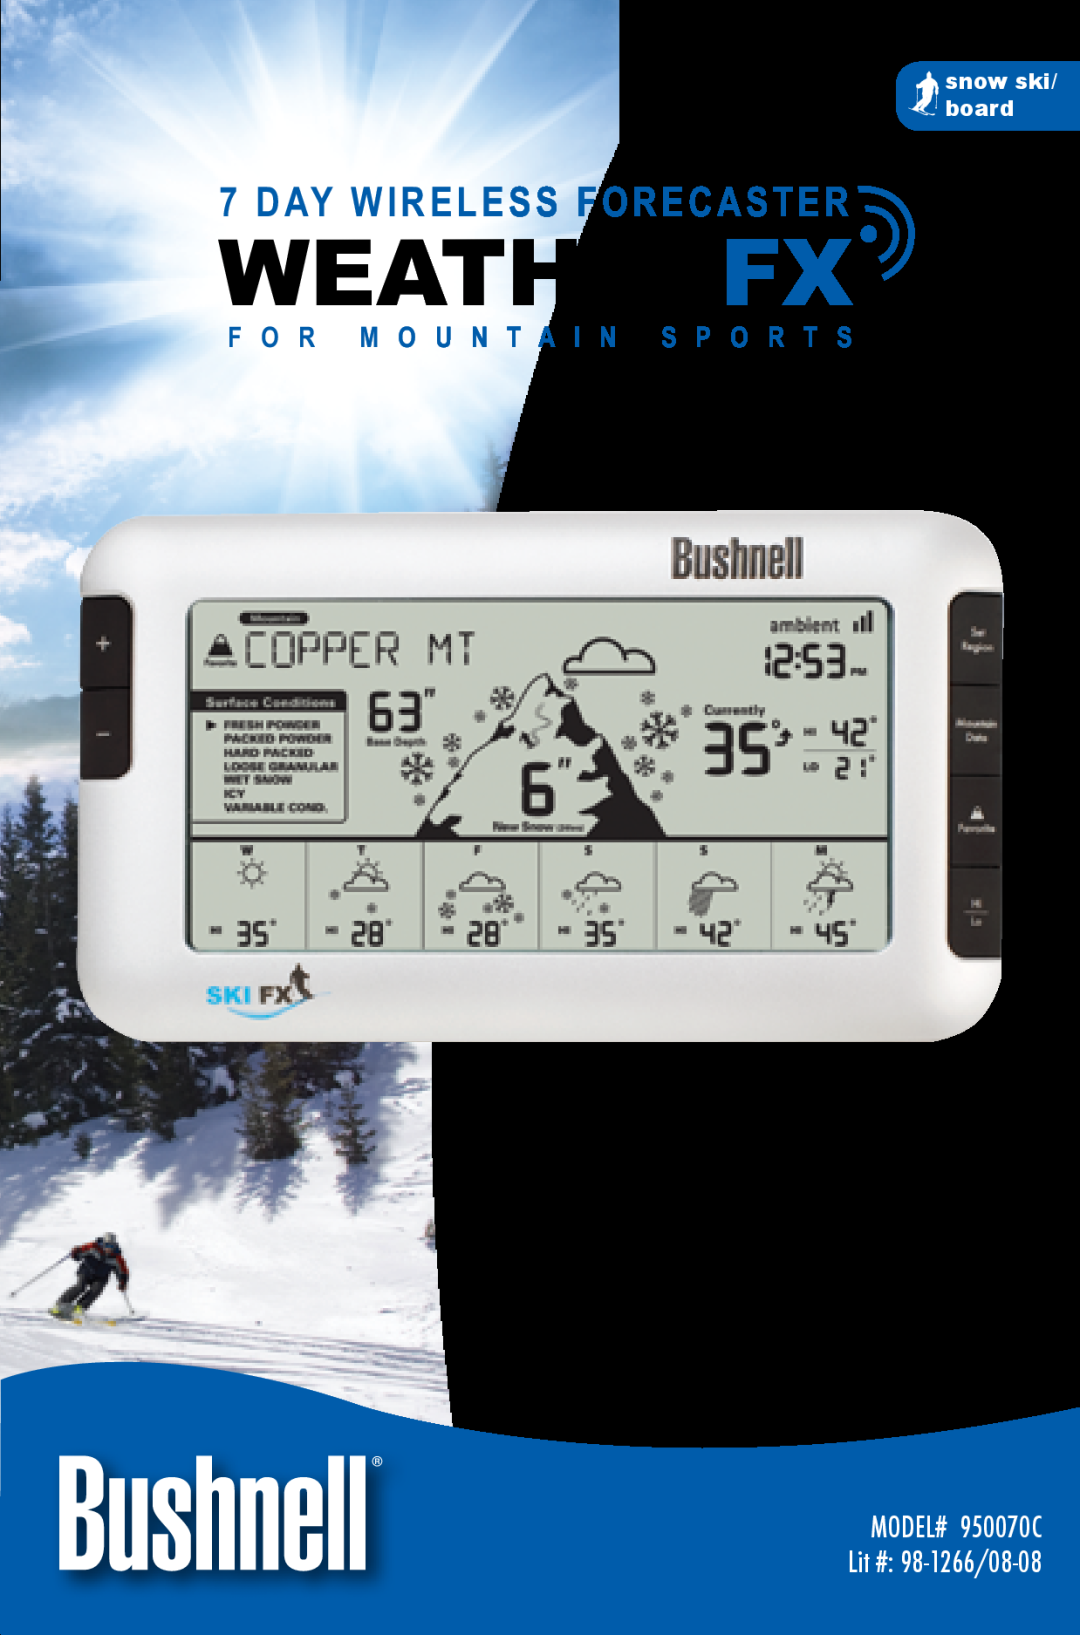 Bushnell 950070C quick start Quick Start Guide, Weatherfx, Day Wireless Forecaster, F O R M O U N T A I N S P O R T S 